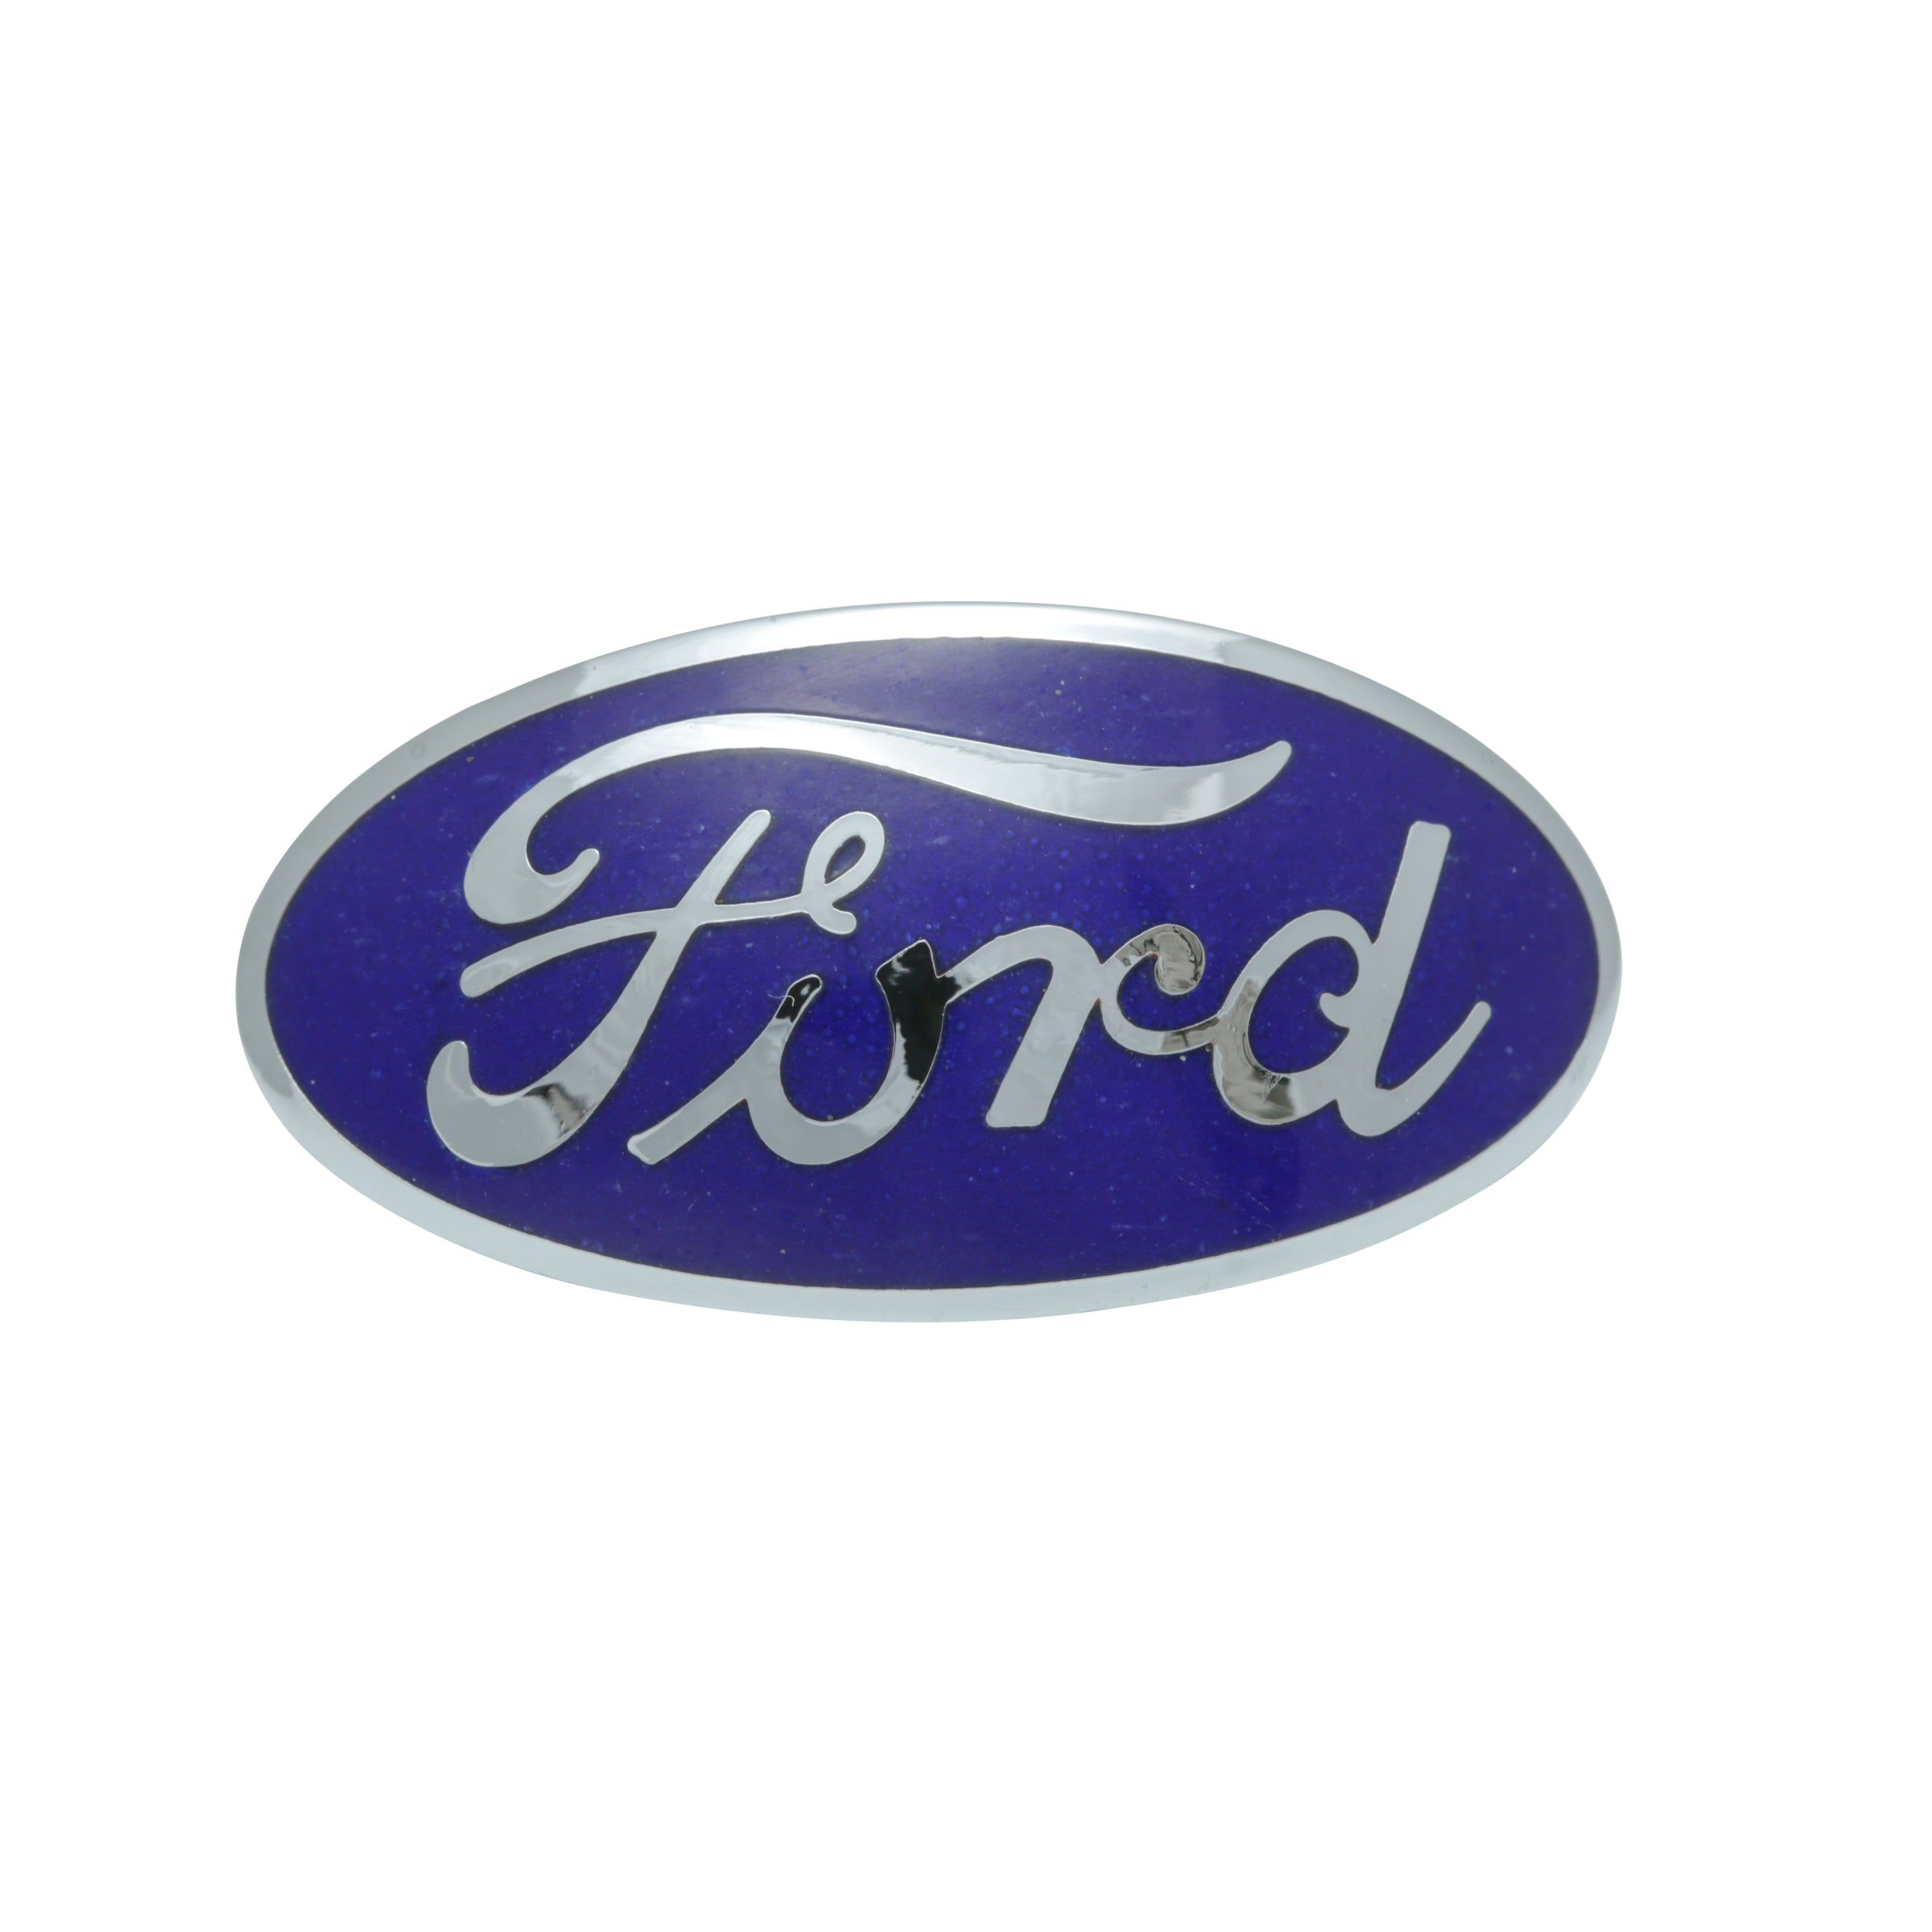 Radiator Emblem • 1934 Ford Passenger